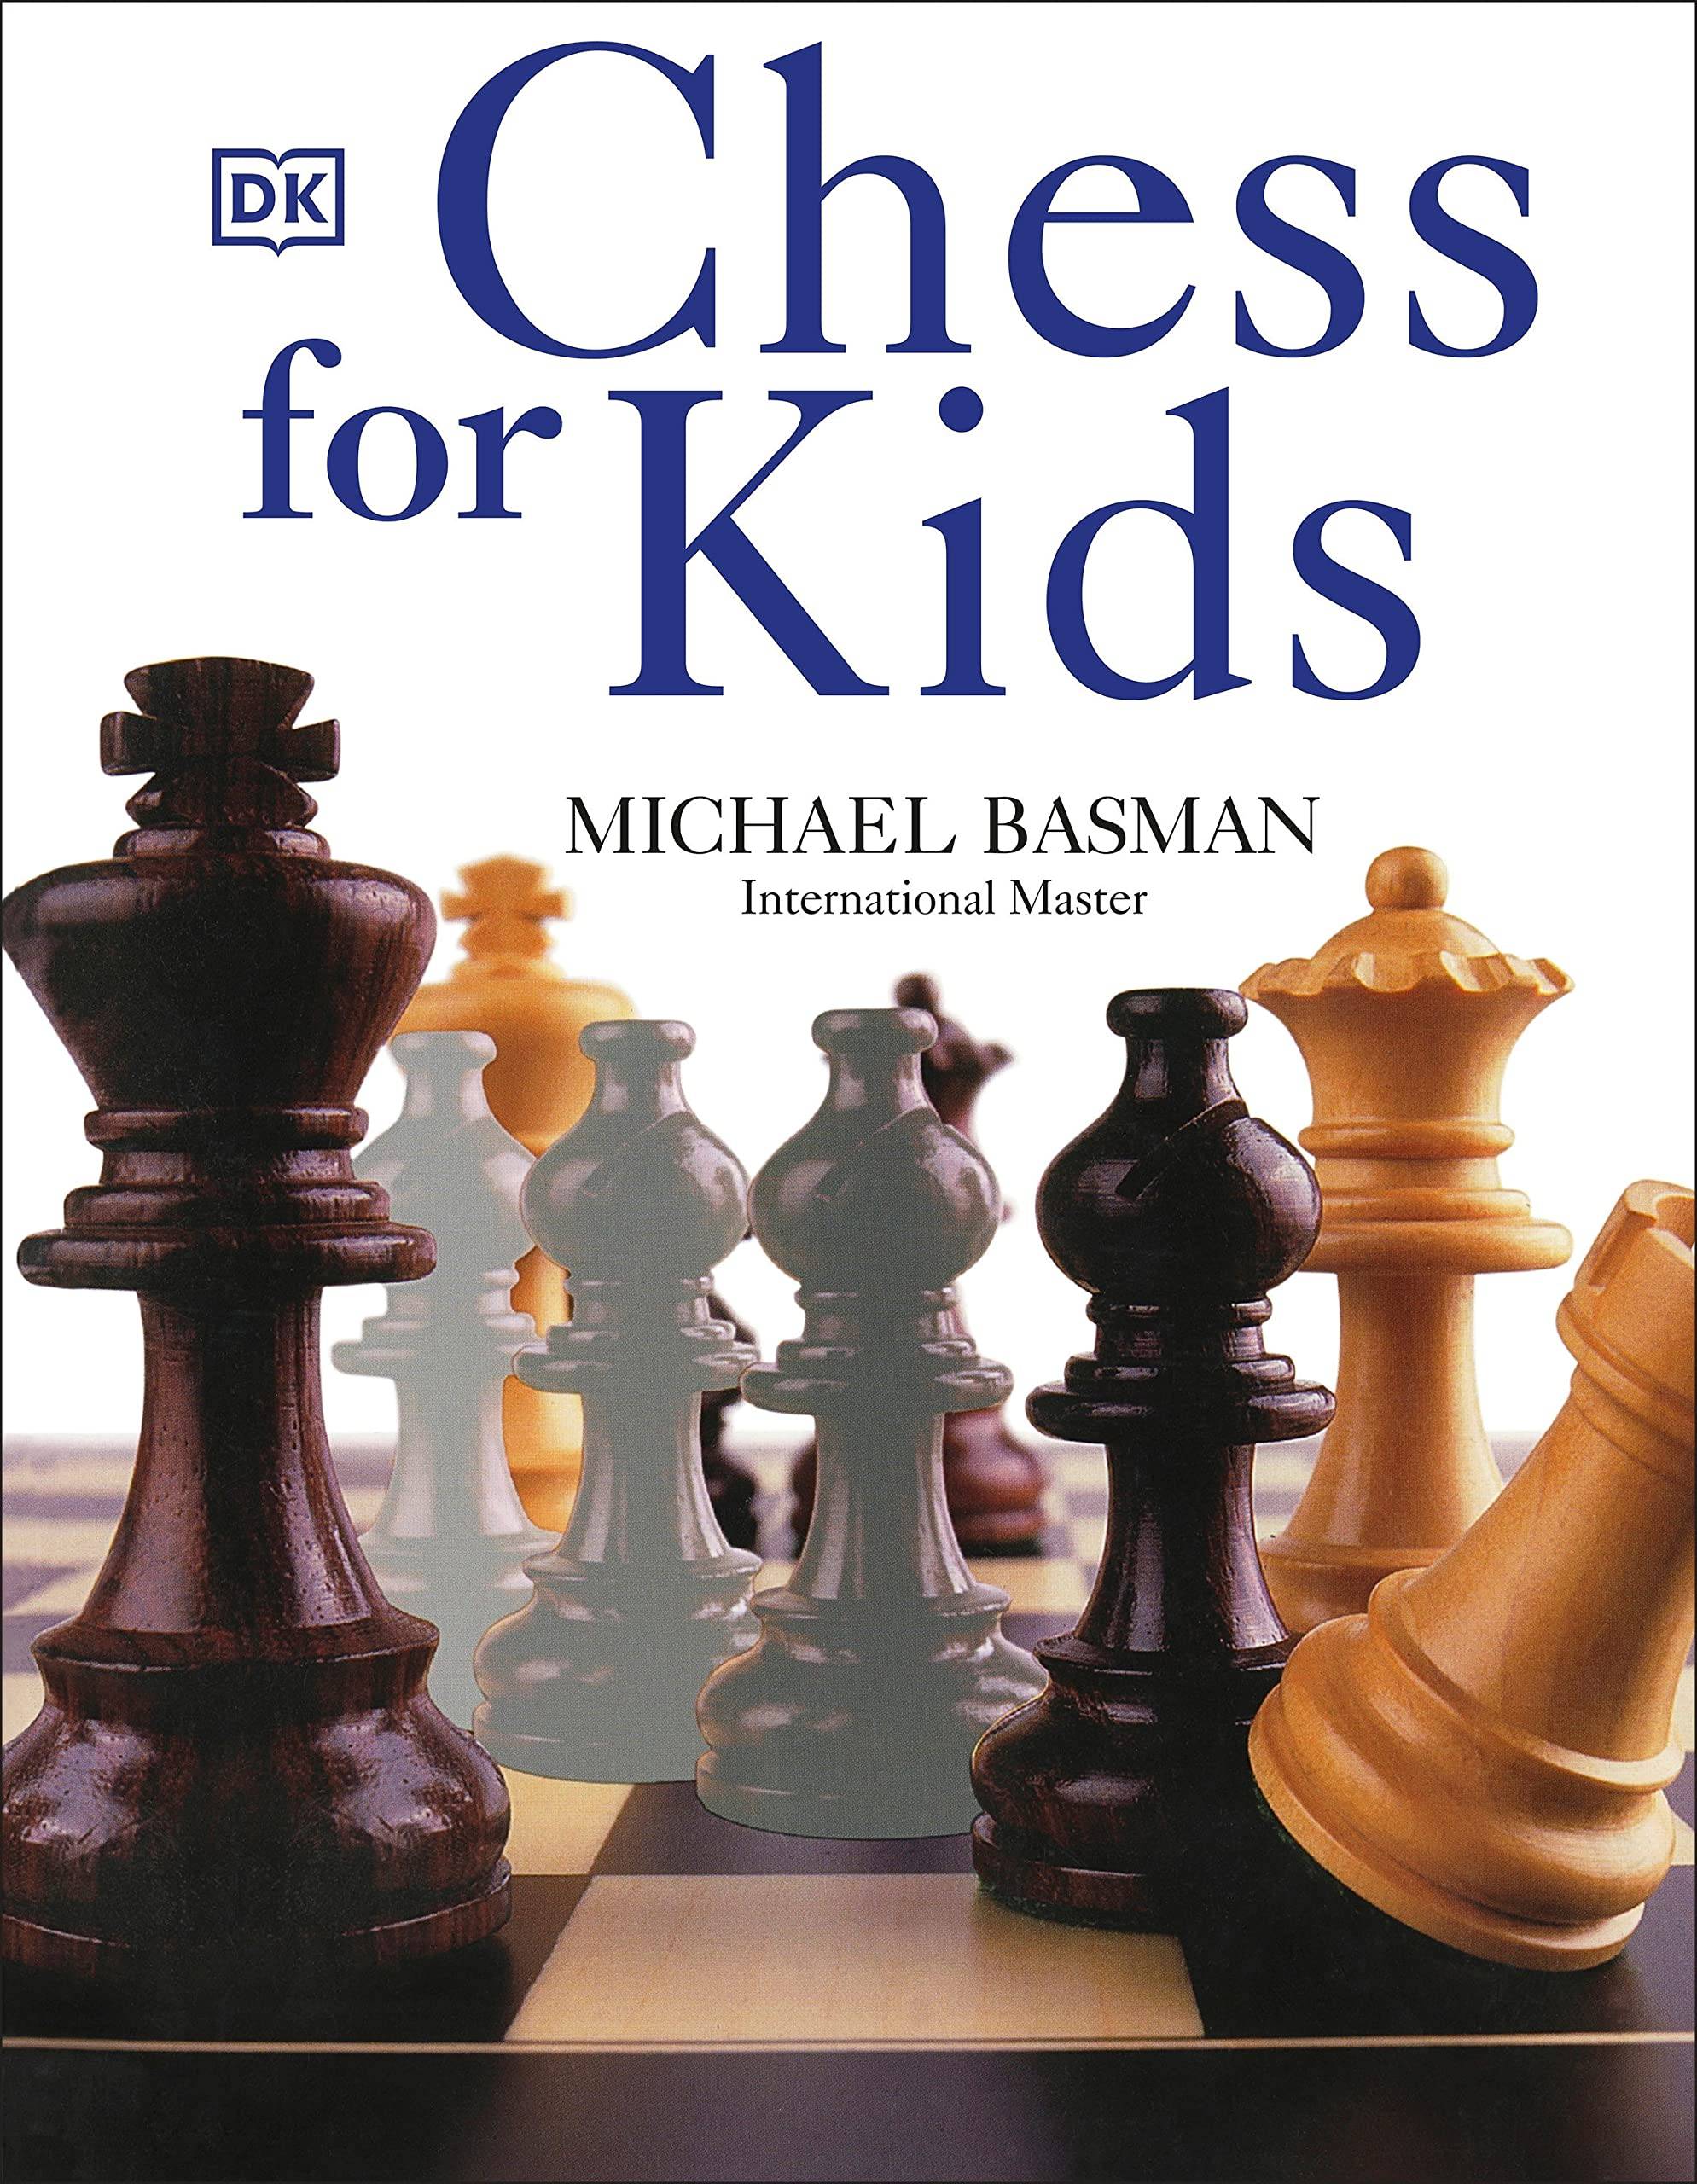 Chess for Kids - SureShot Books Publishing LLC